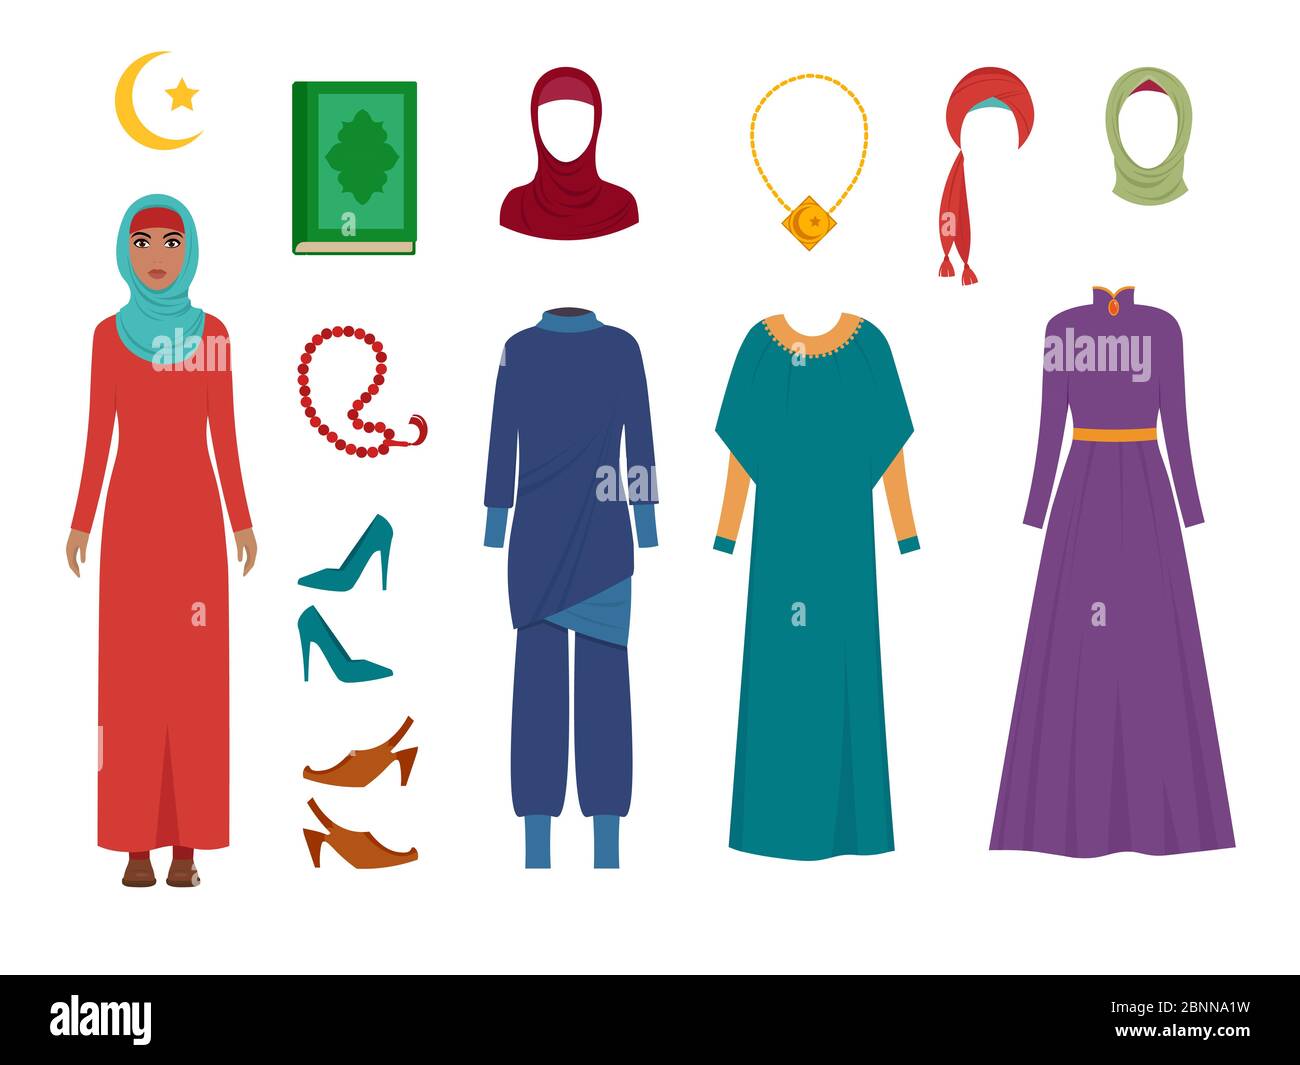 Arab women clothes. National islamic fashion female wardrobe items headscarf hijab dress iranian muslims turkish girls vector pictures Stock Vector